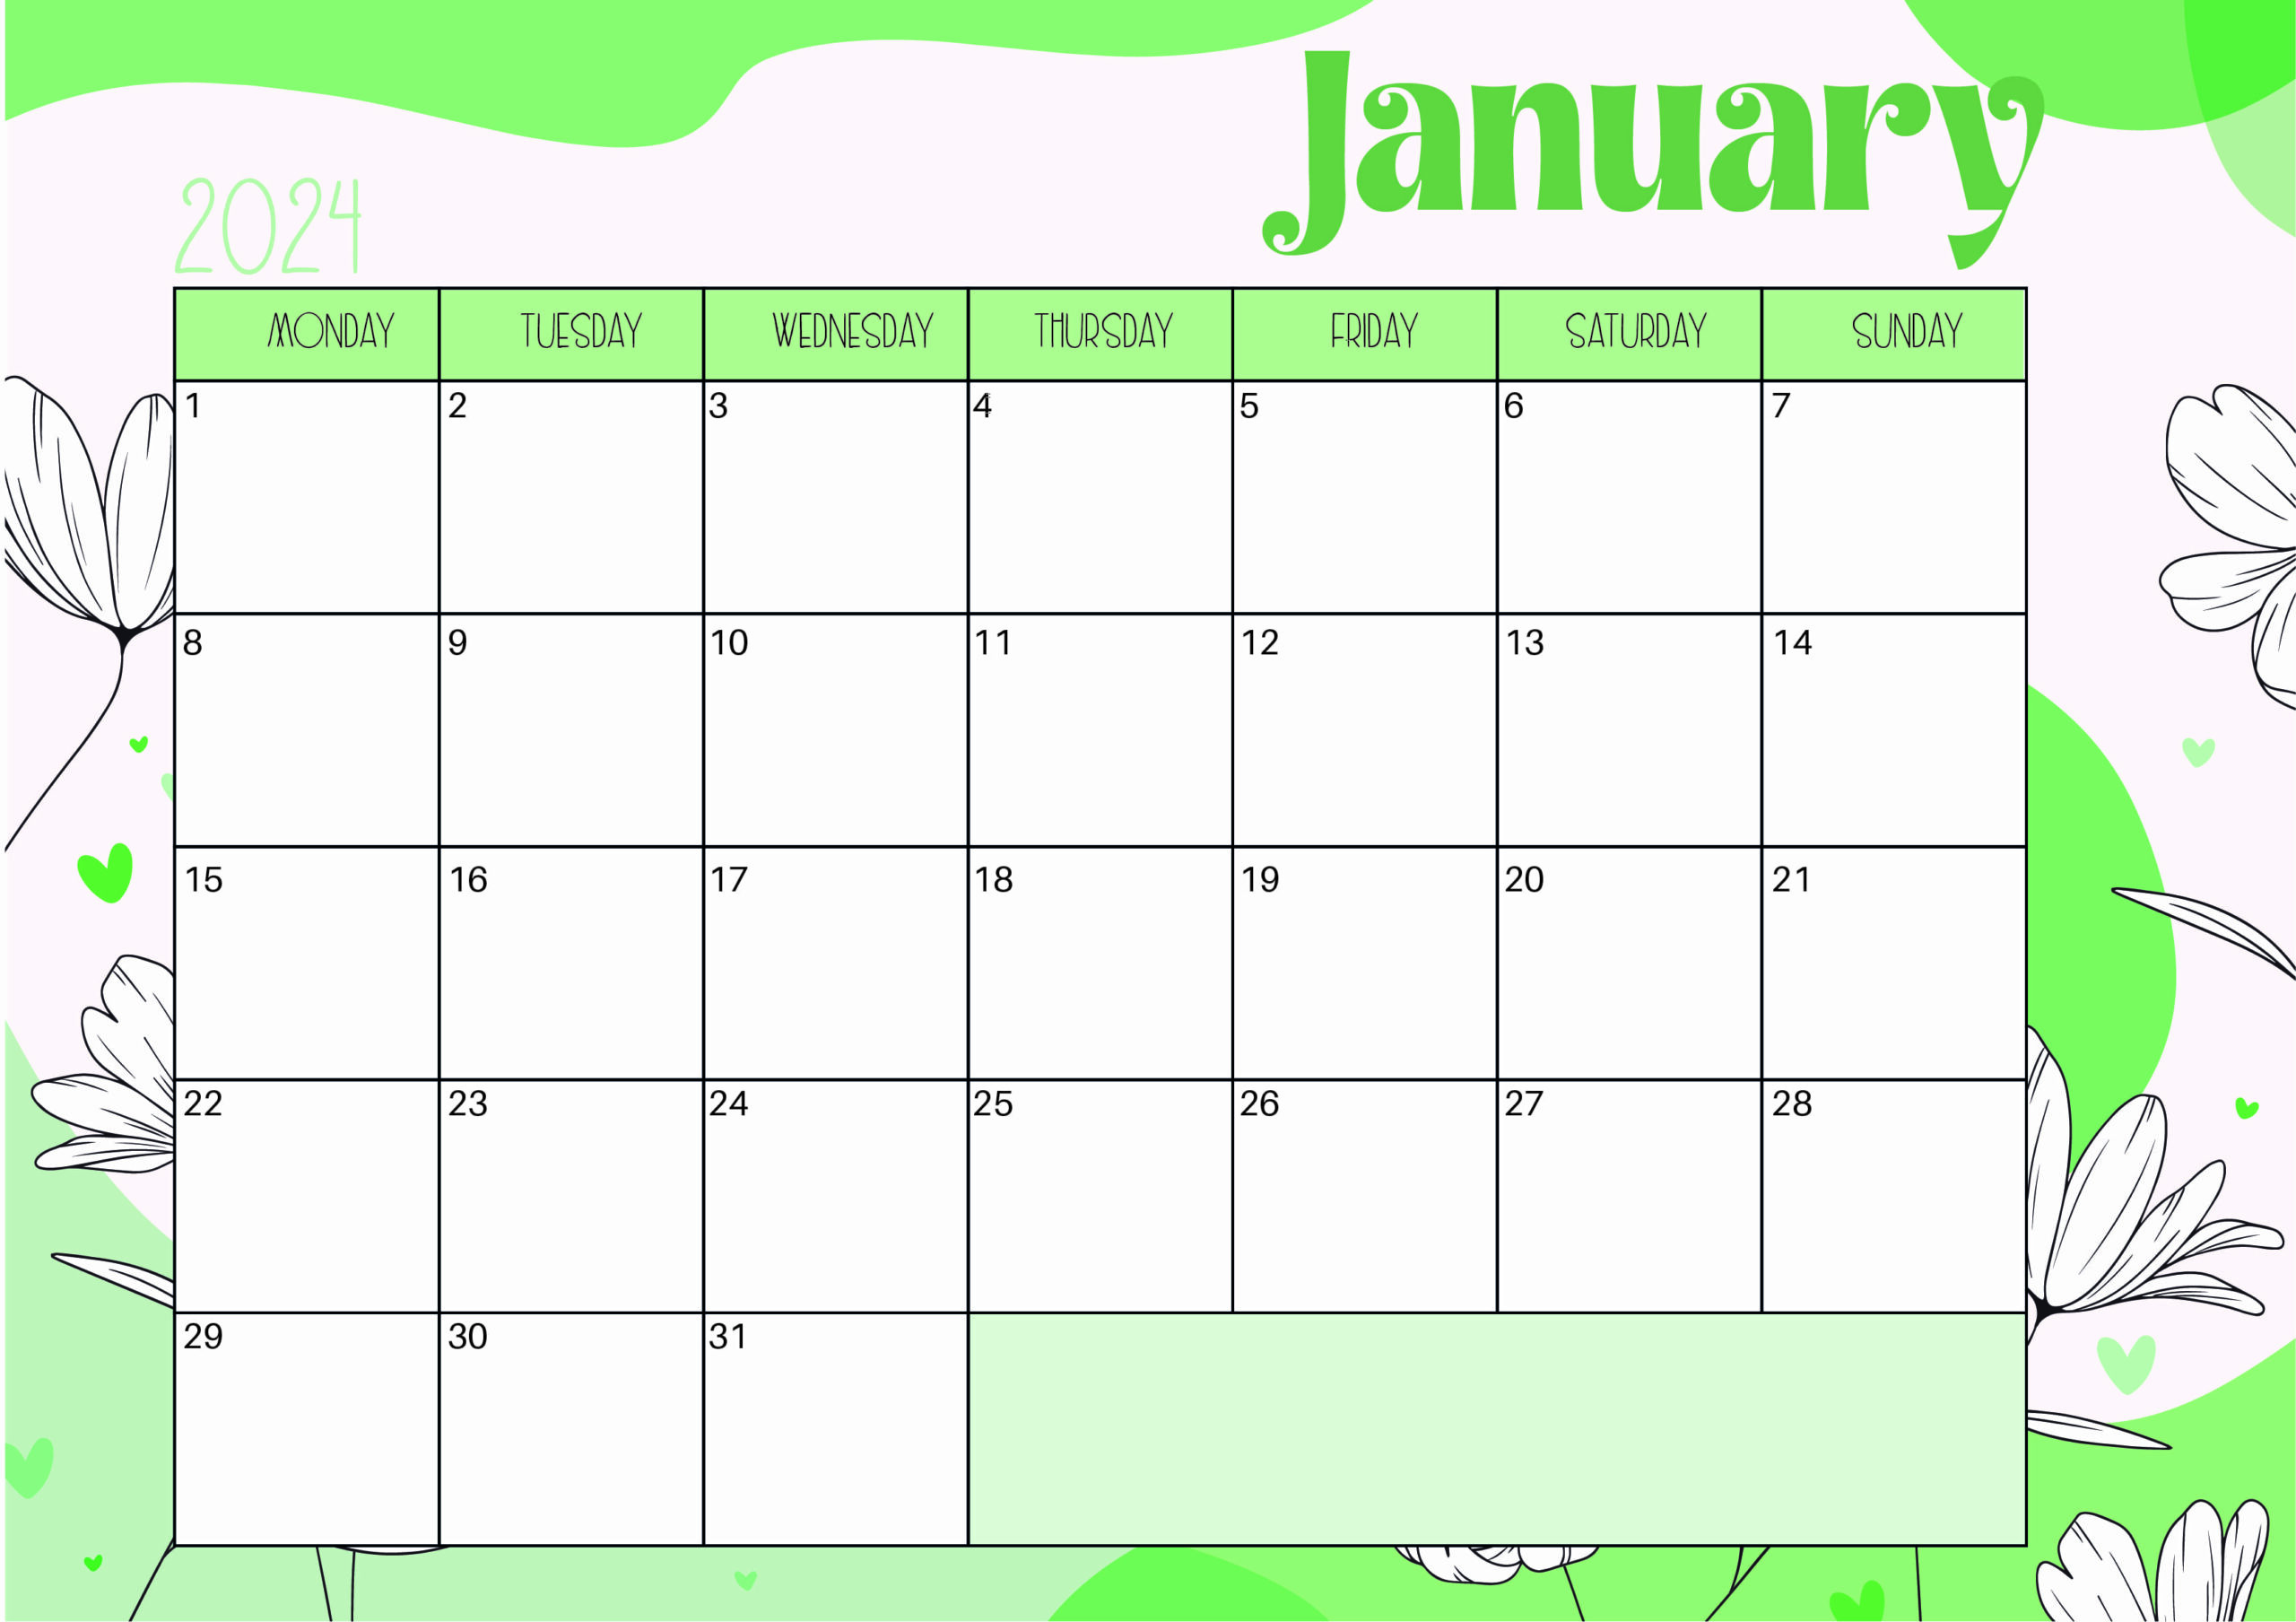 January 2024 Calendar for Printing in PDF